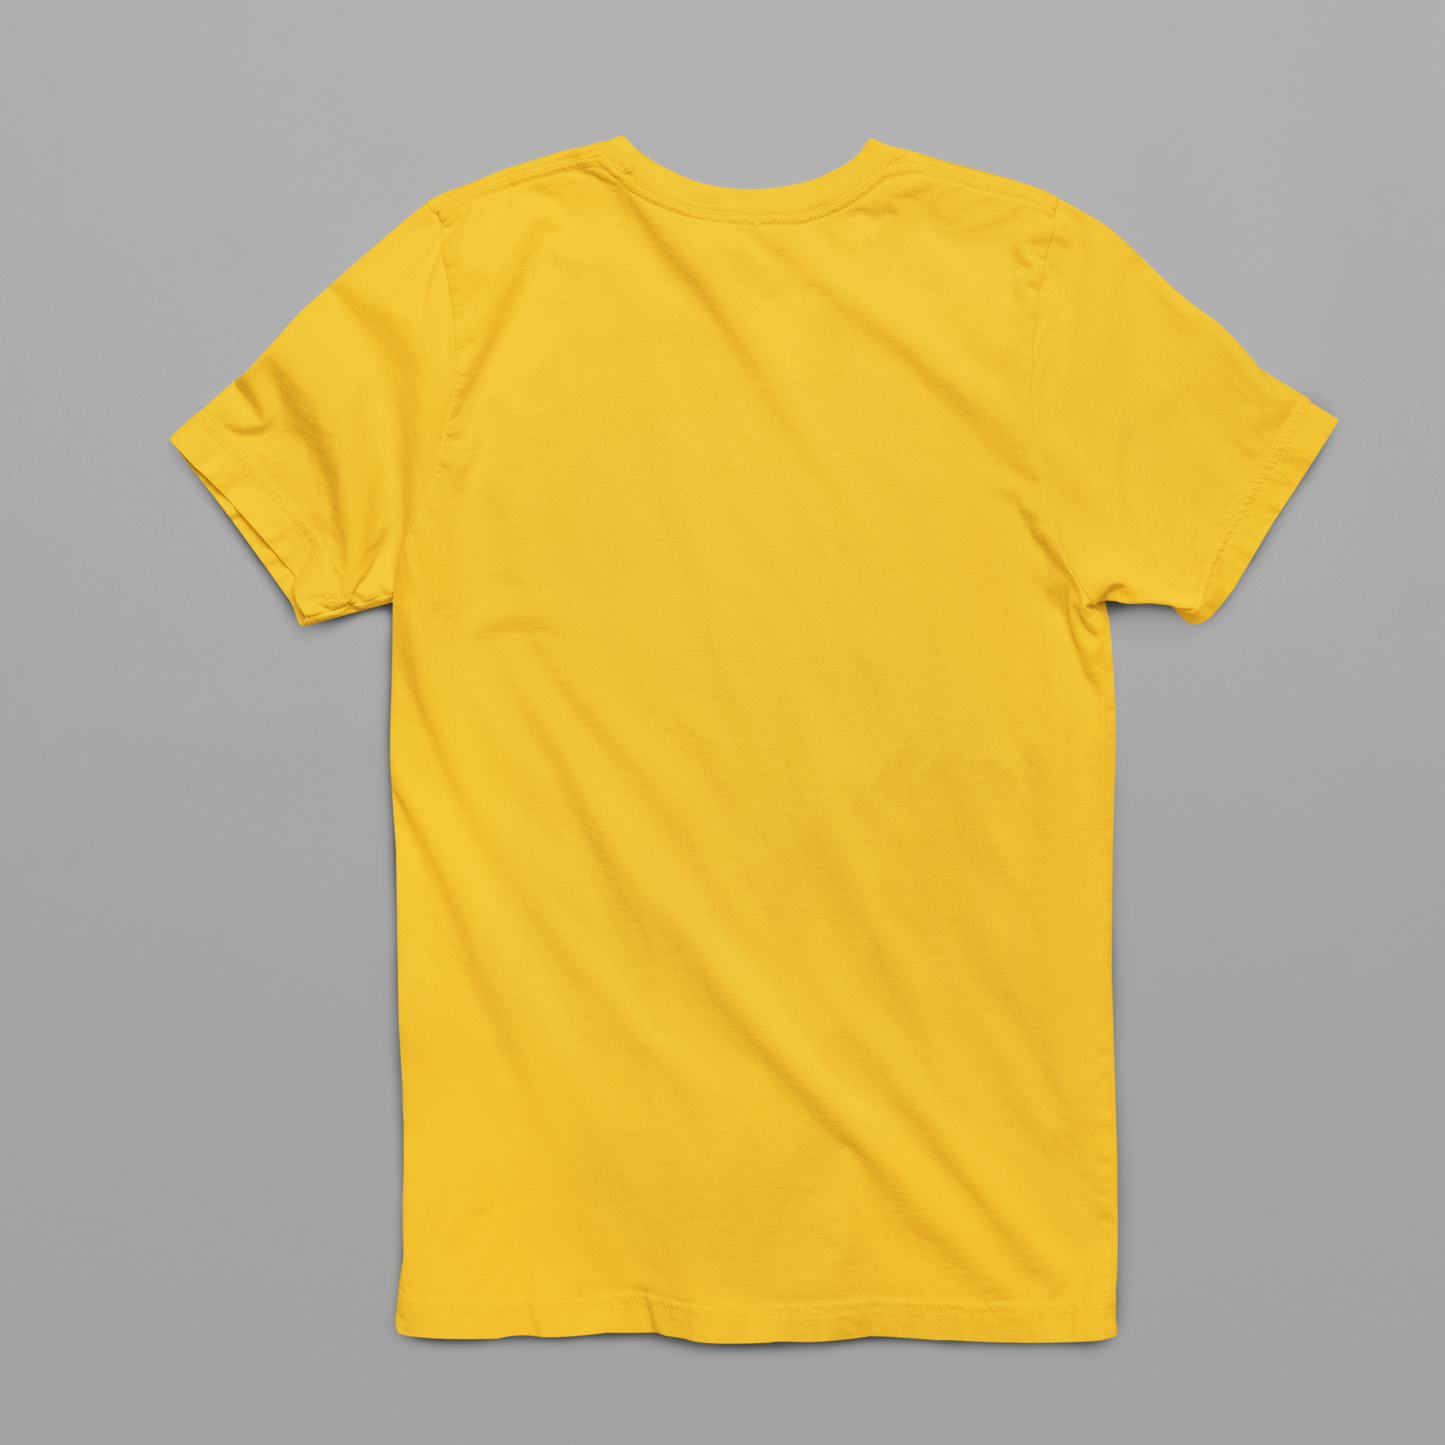 Monkey D Luffy Men Printed Round Neck Cotton T-Shirt - Yellow